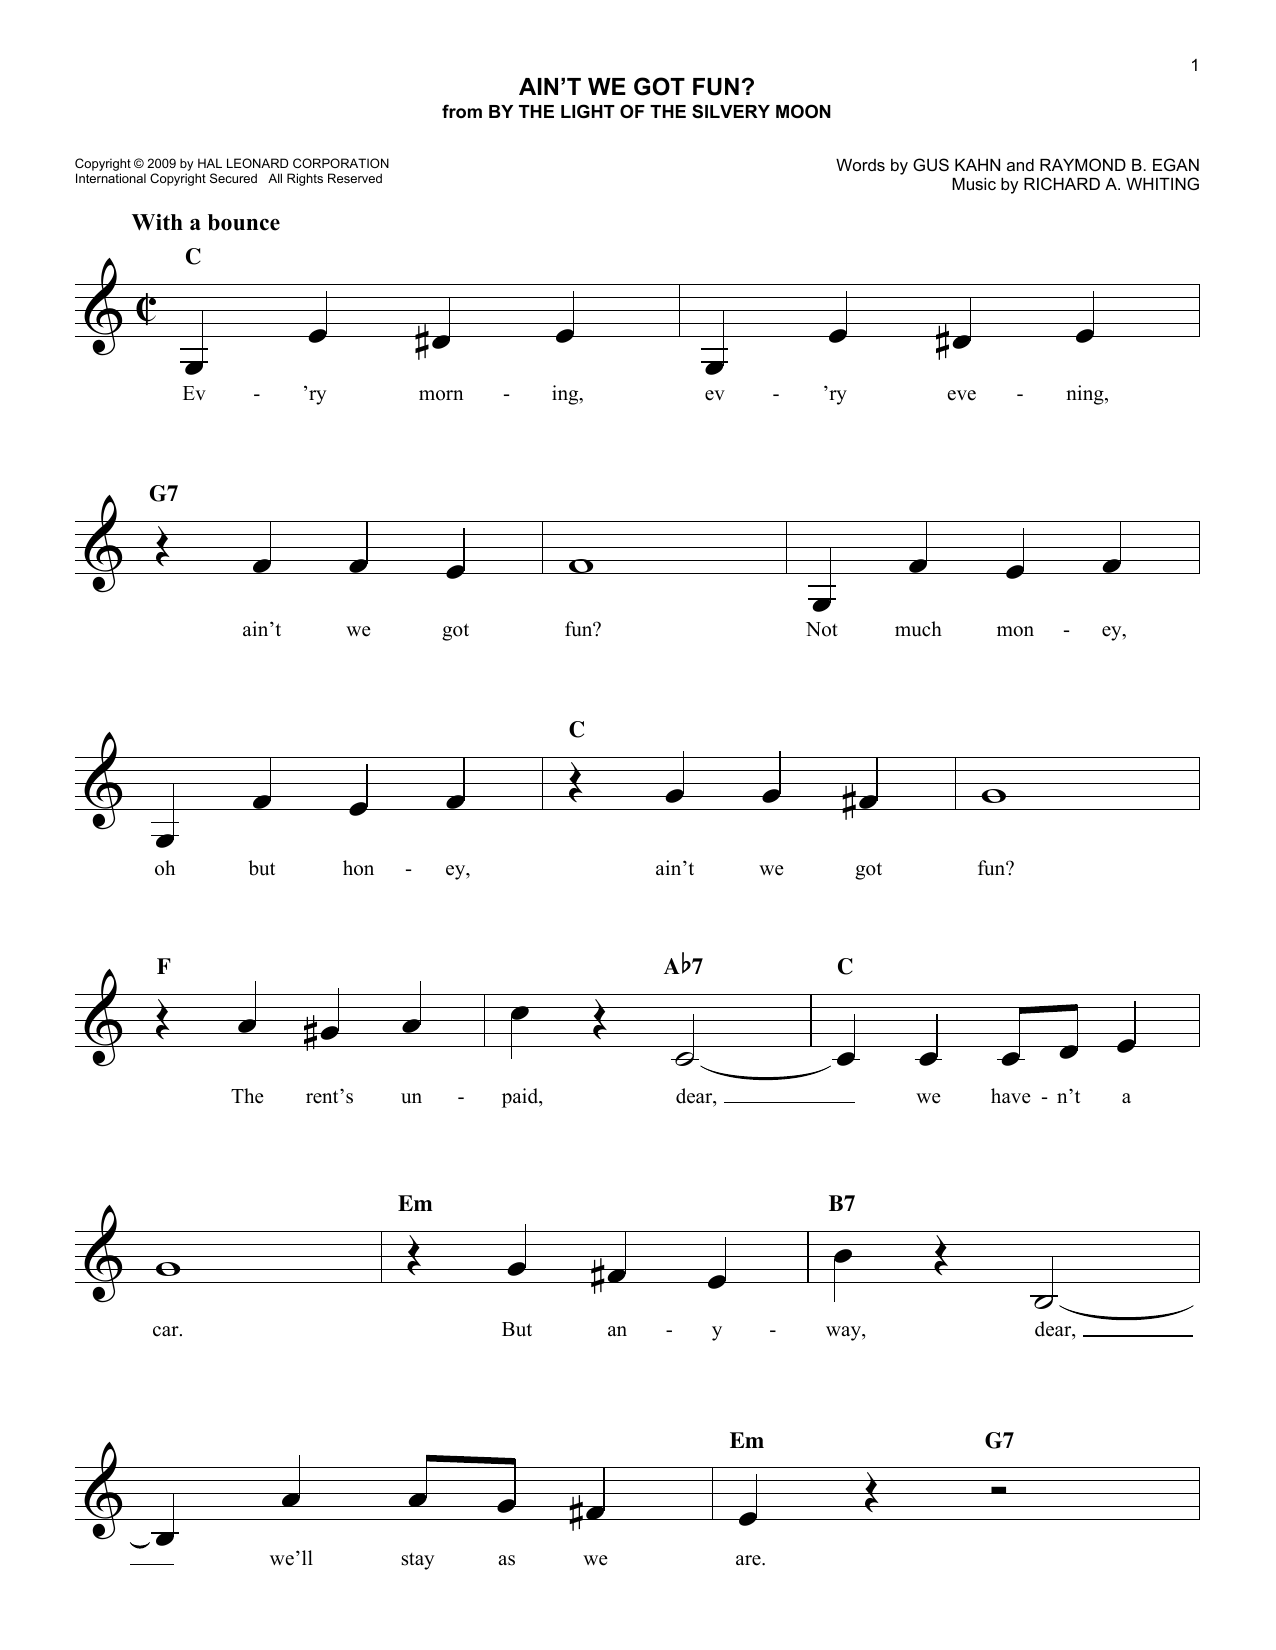 Gus Kahn Ain't We Got Fun? Sheet Music Notes & Chords for Melody Line, Lyrics & Chords - Download or Print PDF